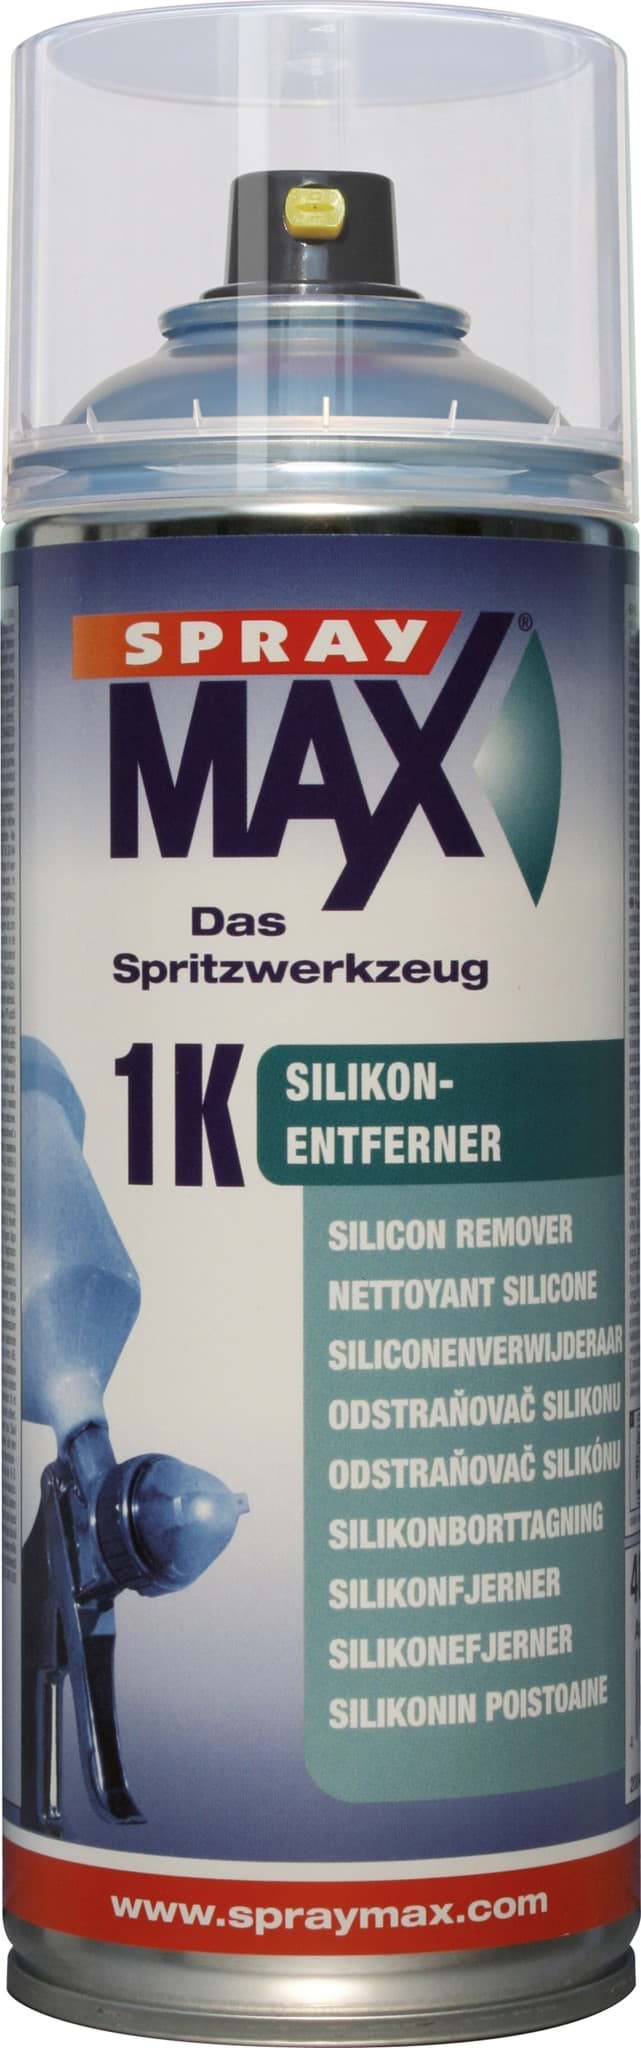 SprayMax Silikon-Entferner Spray 400ml resmi